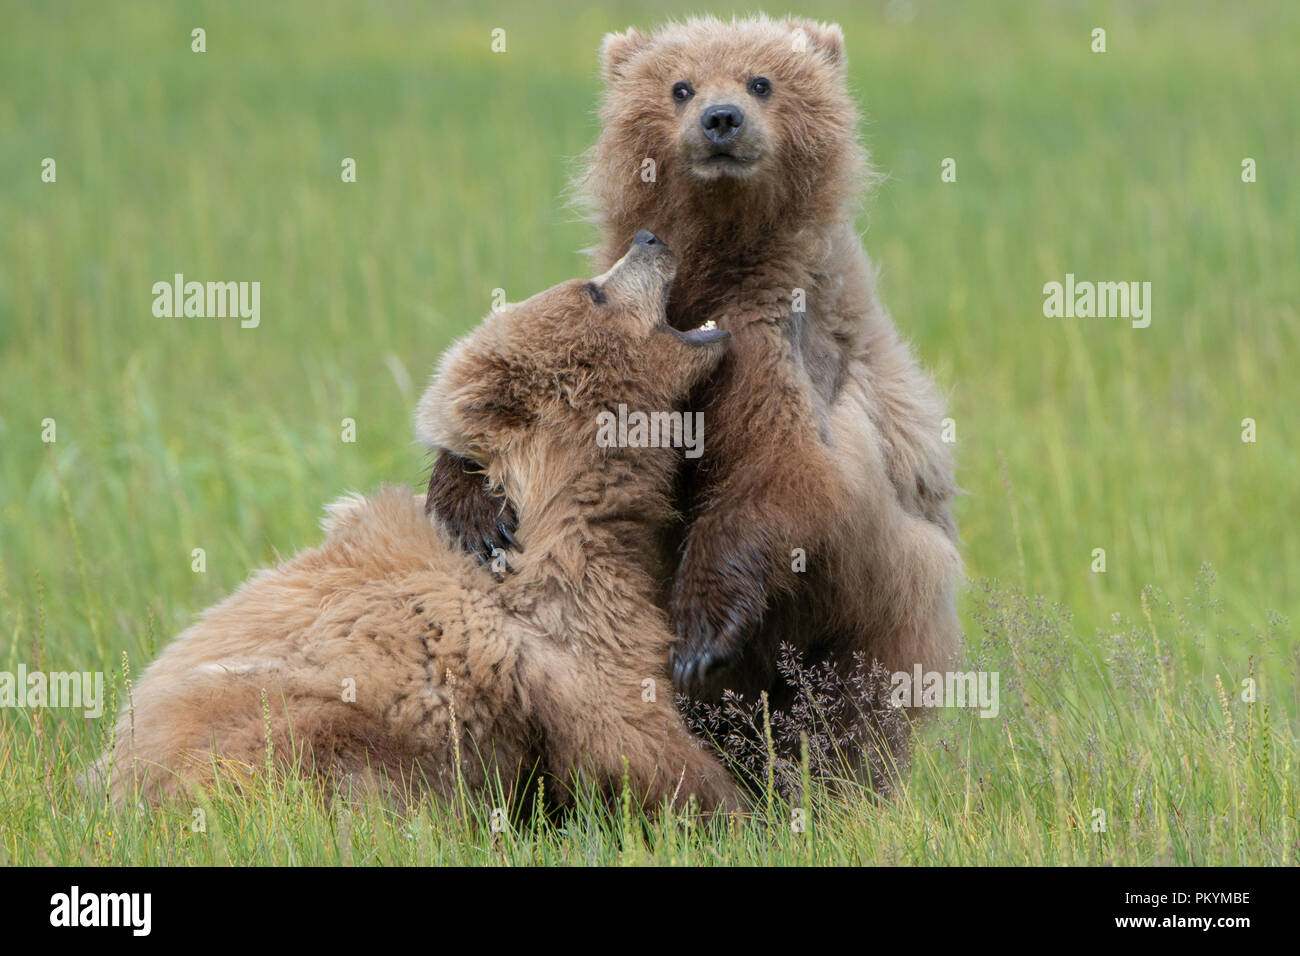 Küsten Brown bear Cubs (Ursus arctos) Wrestling in Gras Wiese, See Clark NP, Alaska Stockfoto